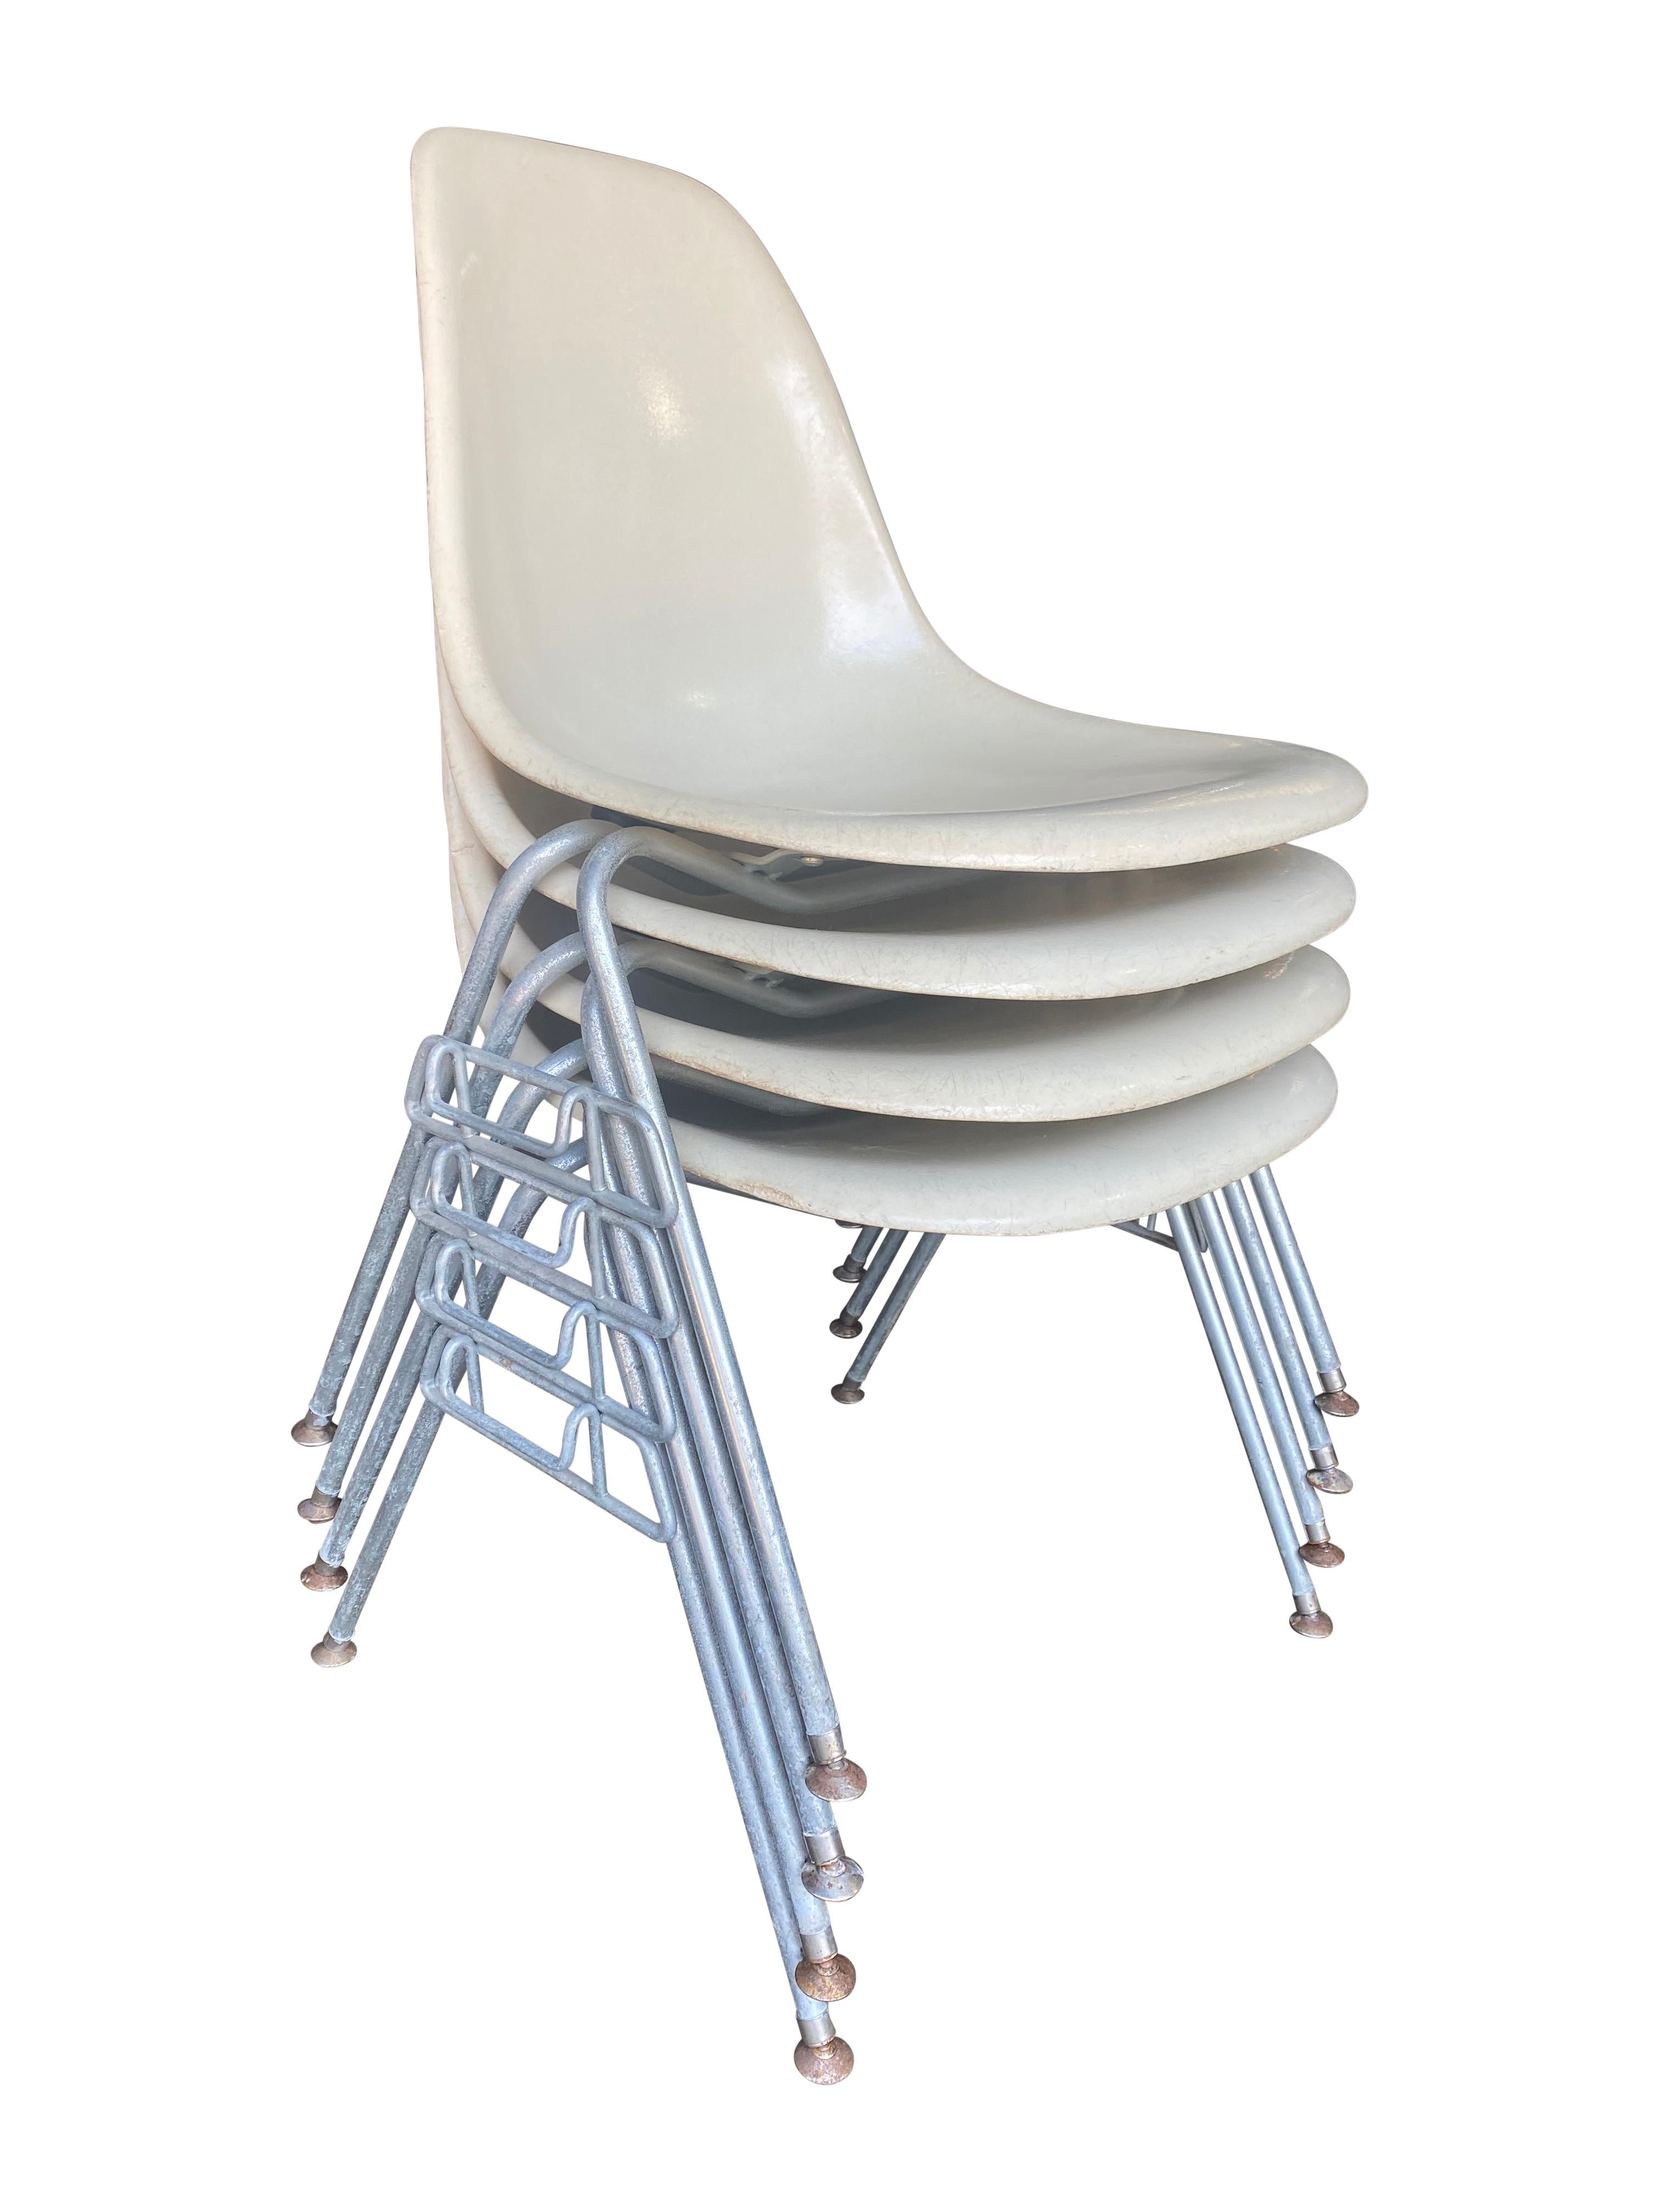 GLIDES 2 ORIGINAL HERMAN MILLER EAMES Fiberglass Shell Stacking Chair Glides 